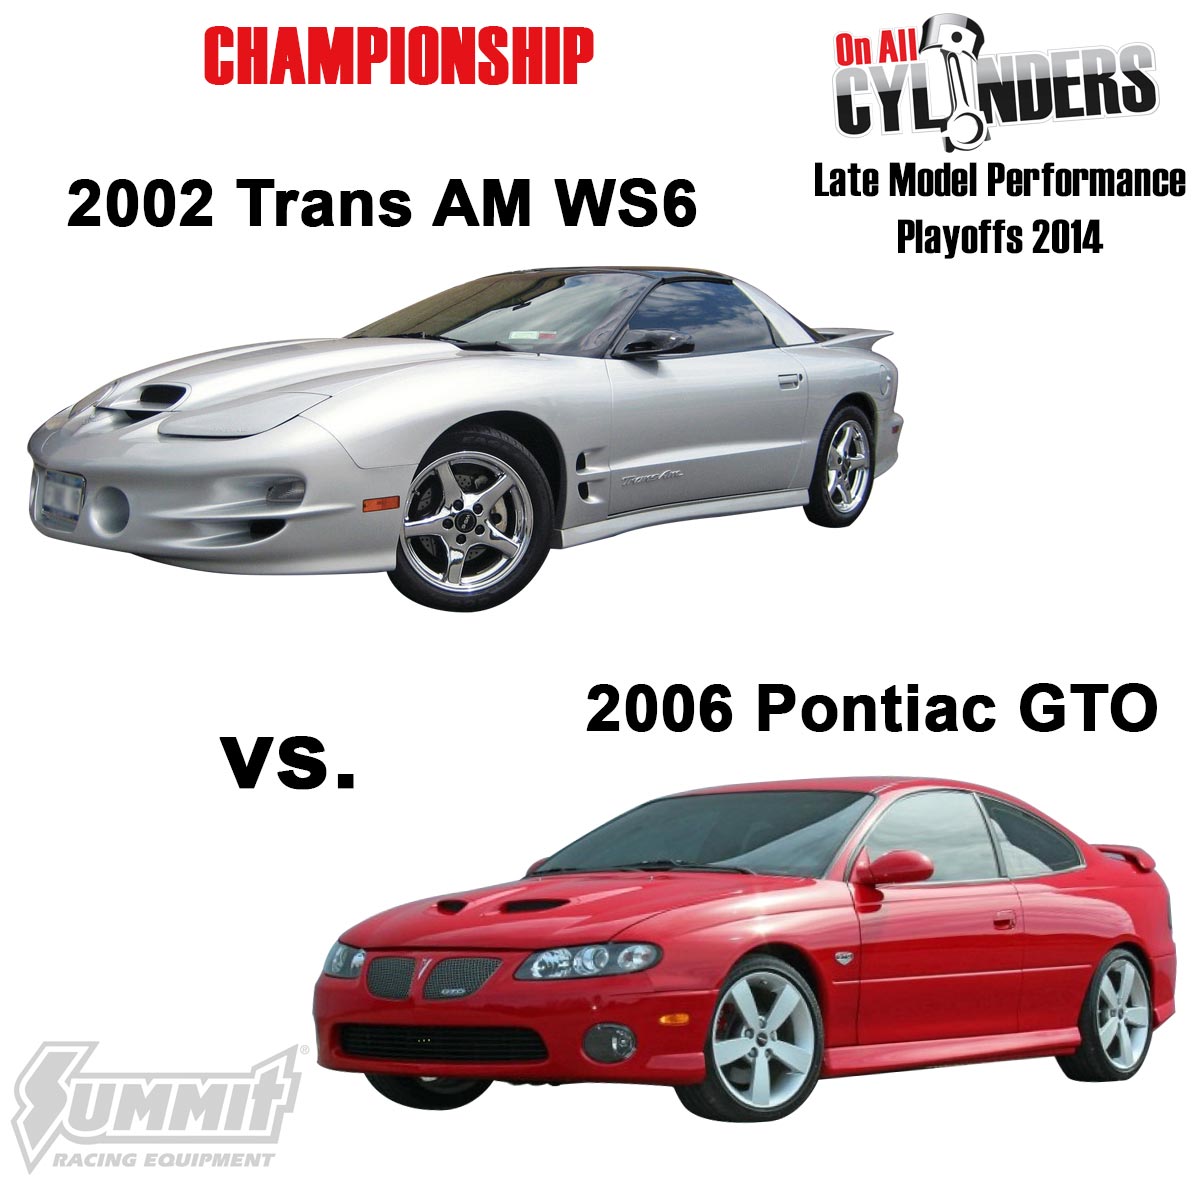 2002 Trans Am WS6 vs. 2006 Pontiac GTO